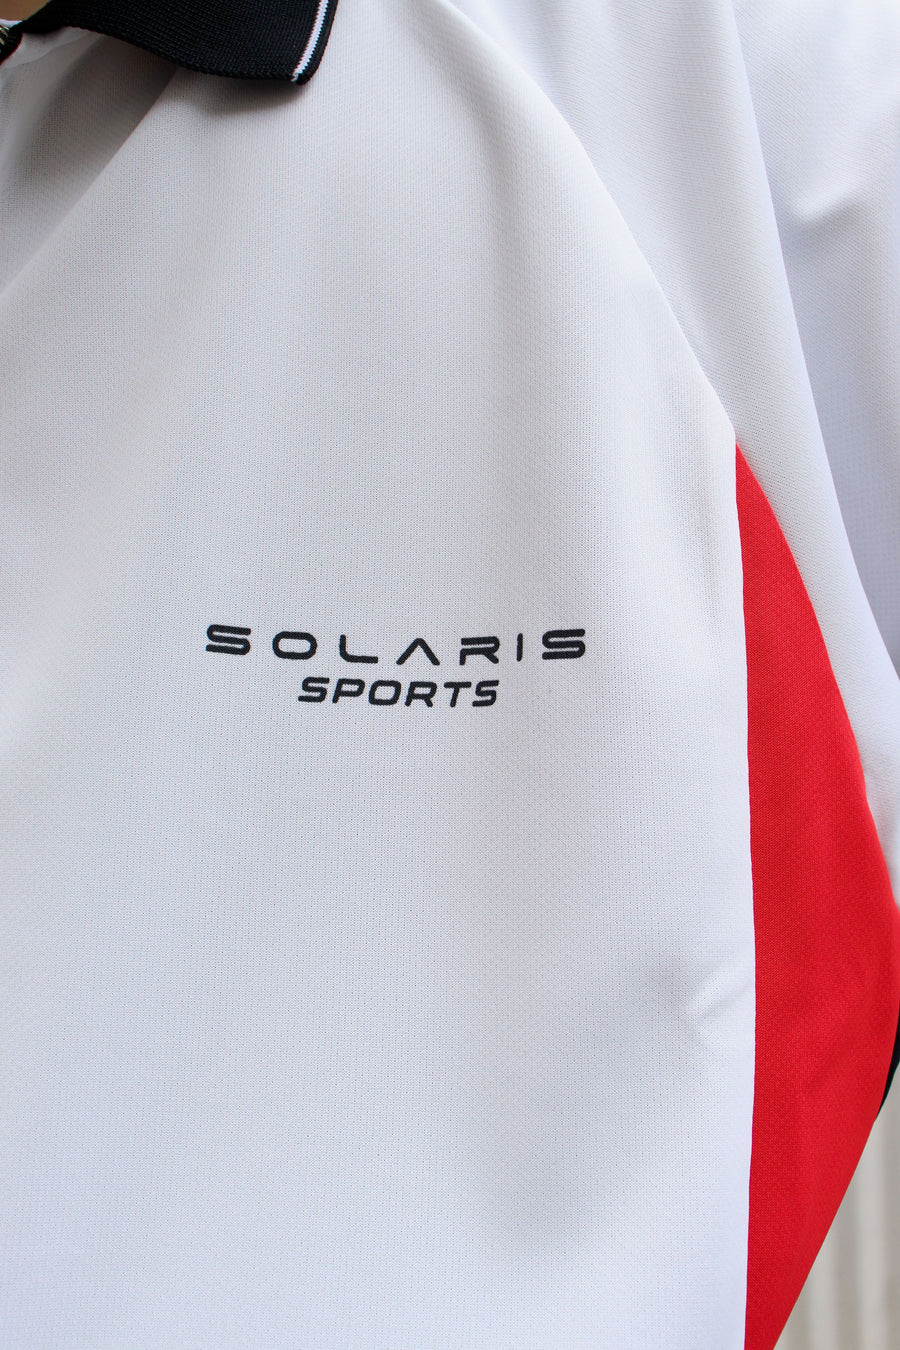 Solaris Sports (Solaris Sports) L/S Football Shirt (shirt) mail